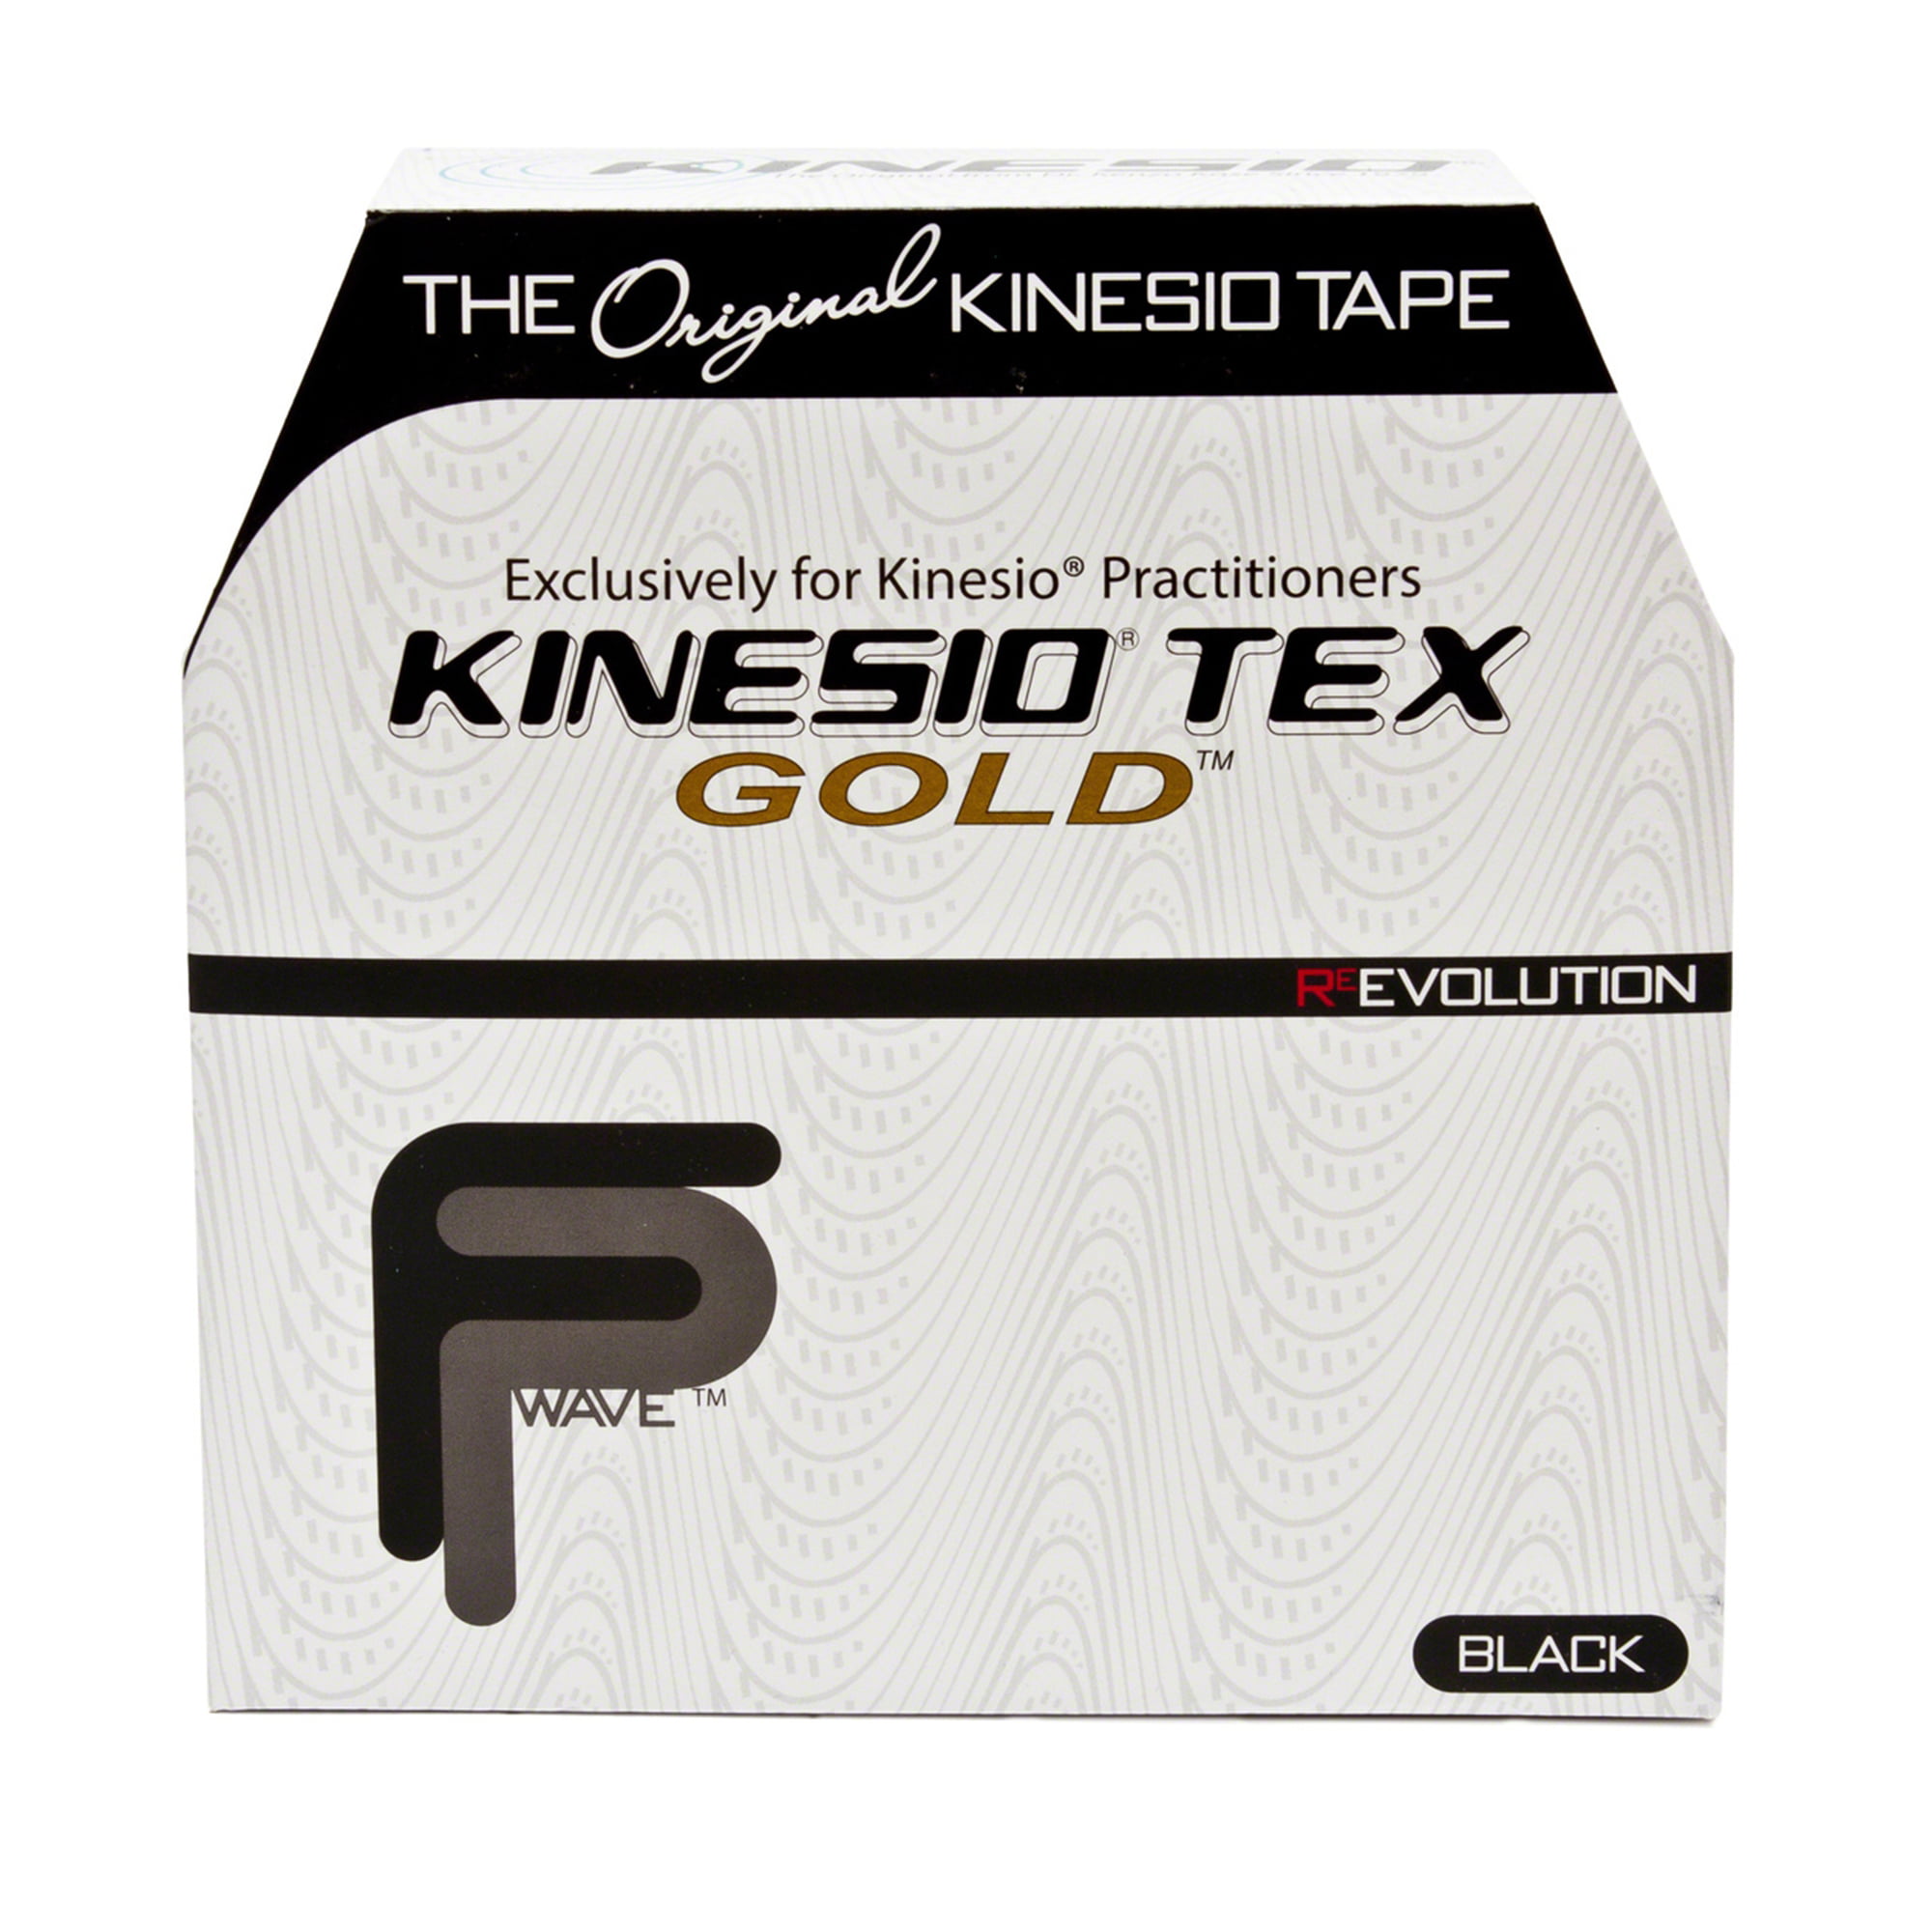 PerformTex Kinesiology Tape - Bulk Roll - My PT Store